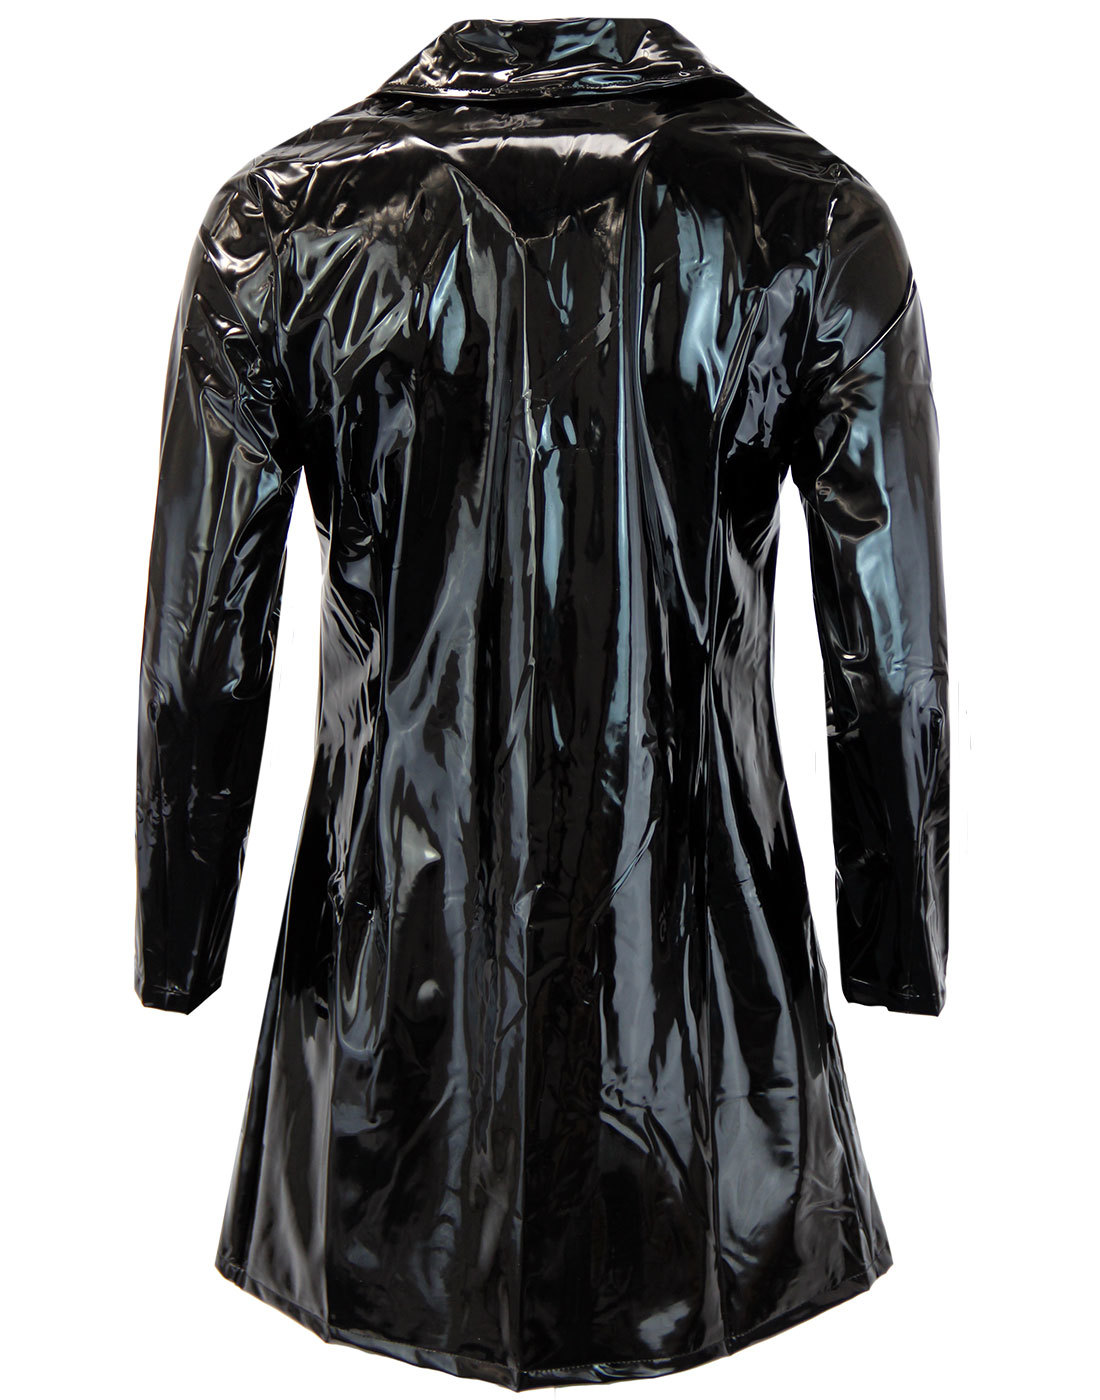 MADCAP ENGLAND Jackie Retro Mod 60's PVC Raincoat in Black/Black